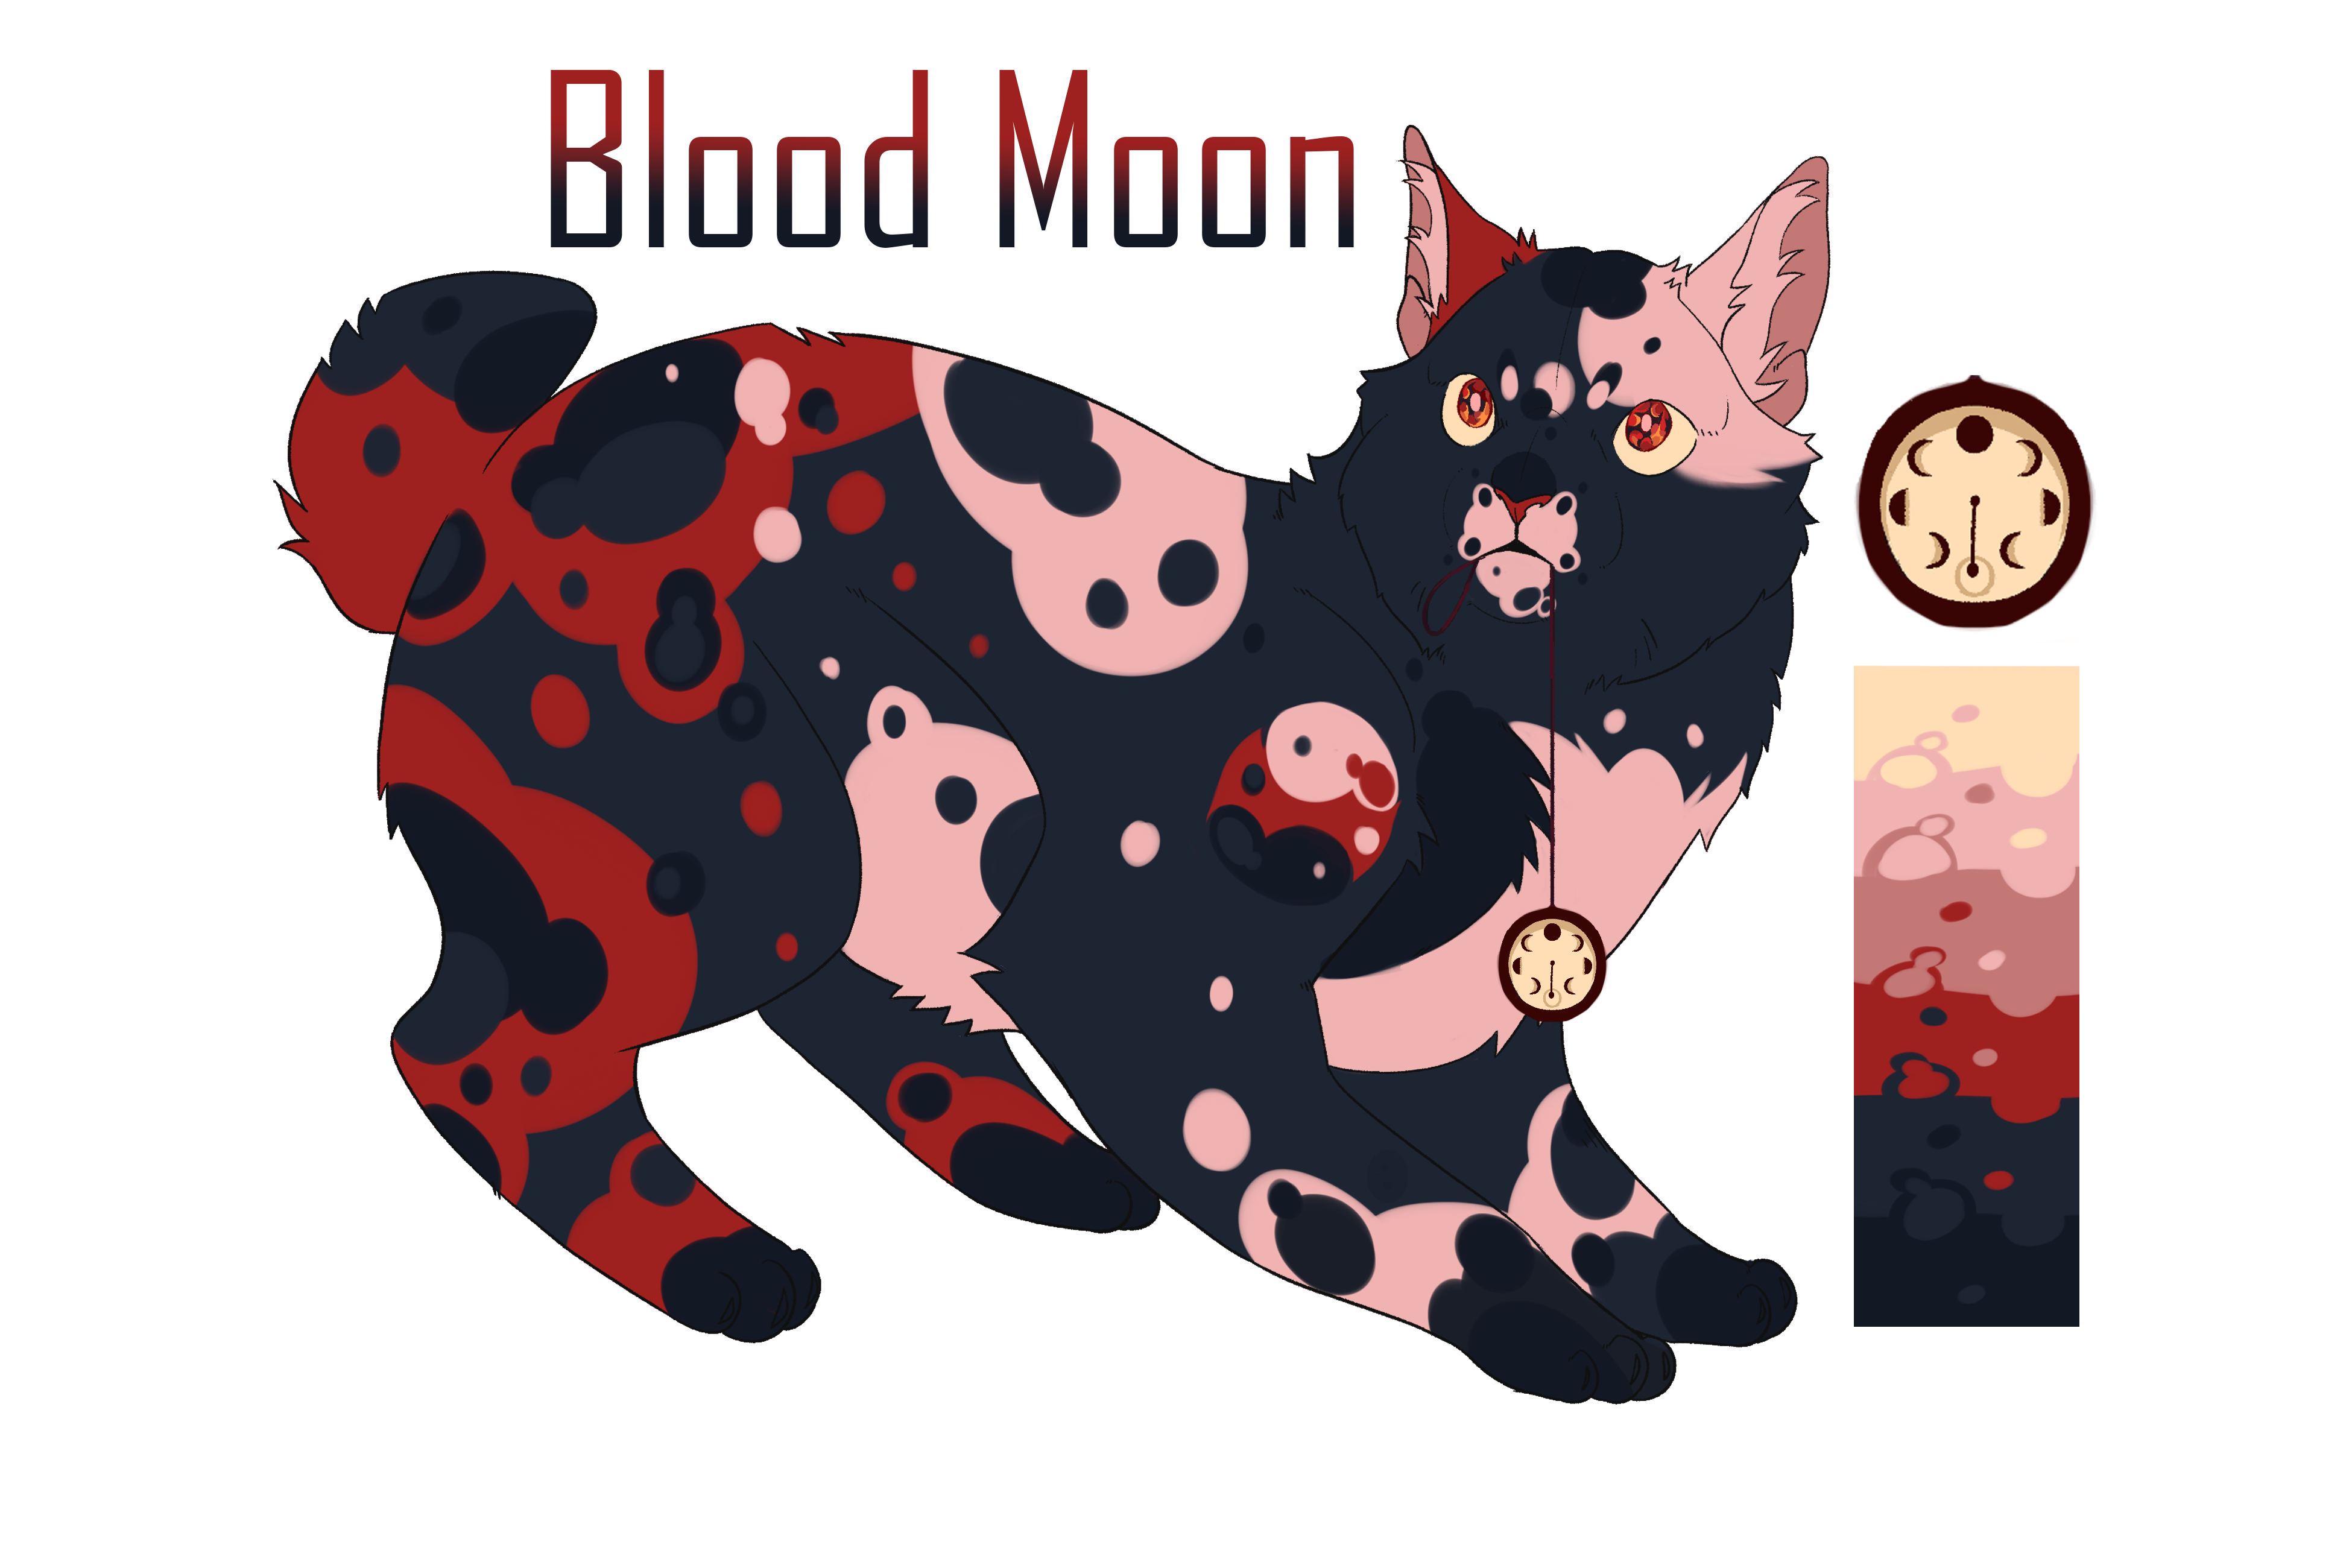 Blood Moon Asuram